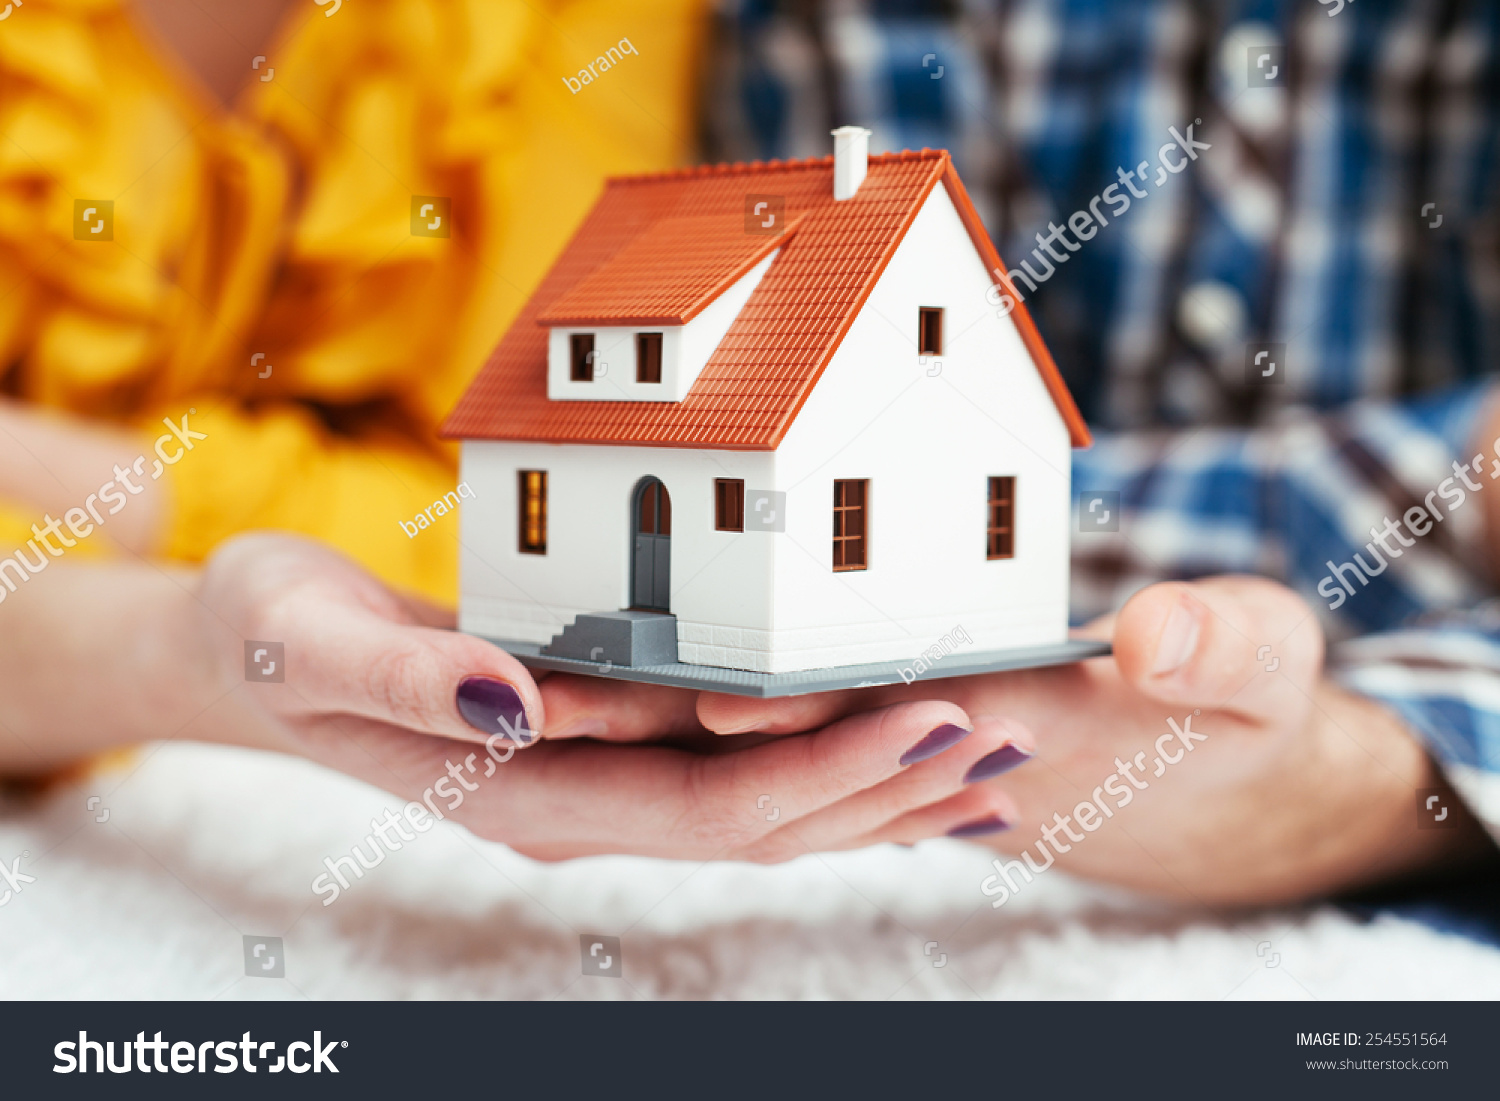 up house miniature